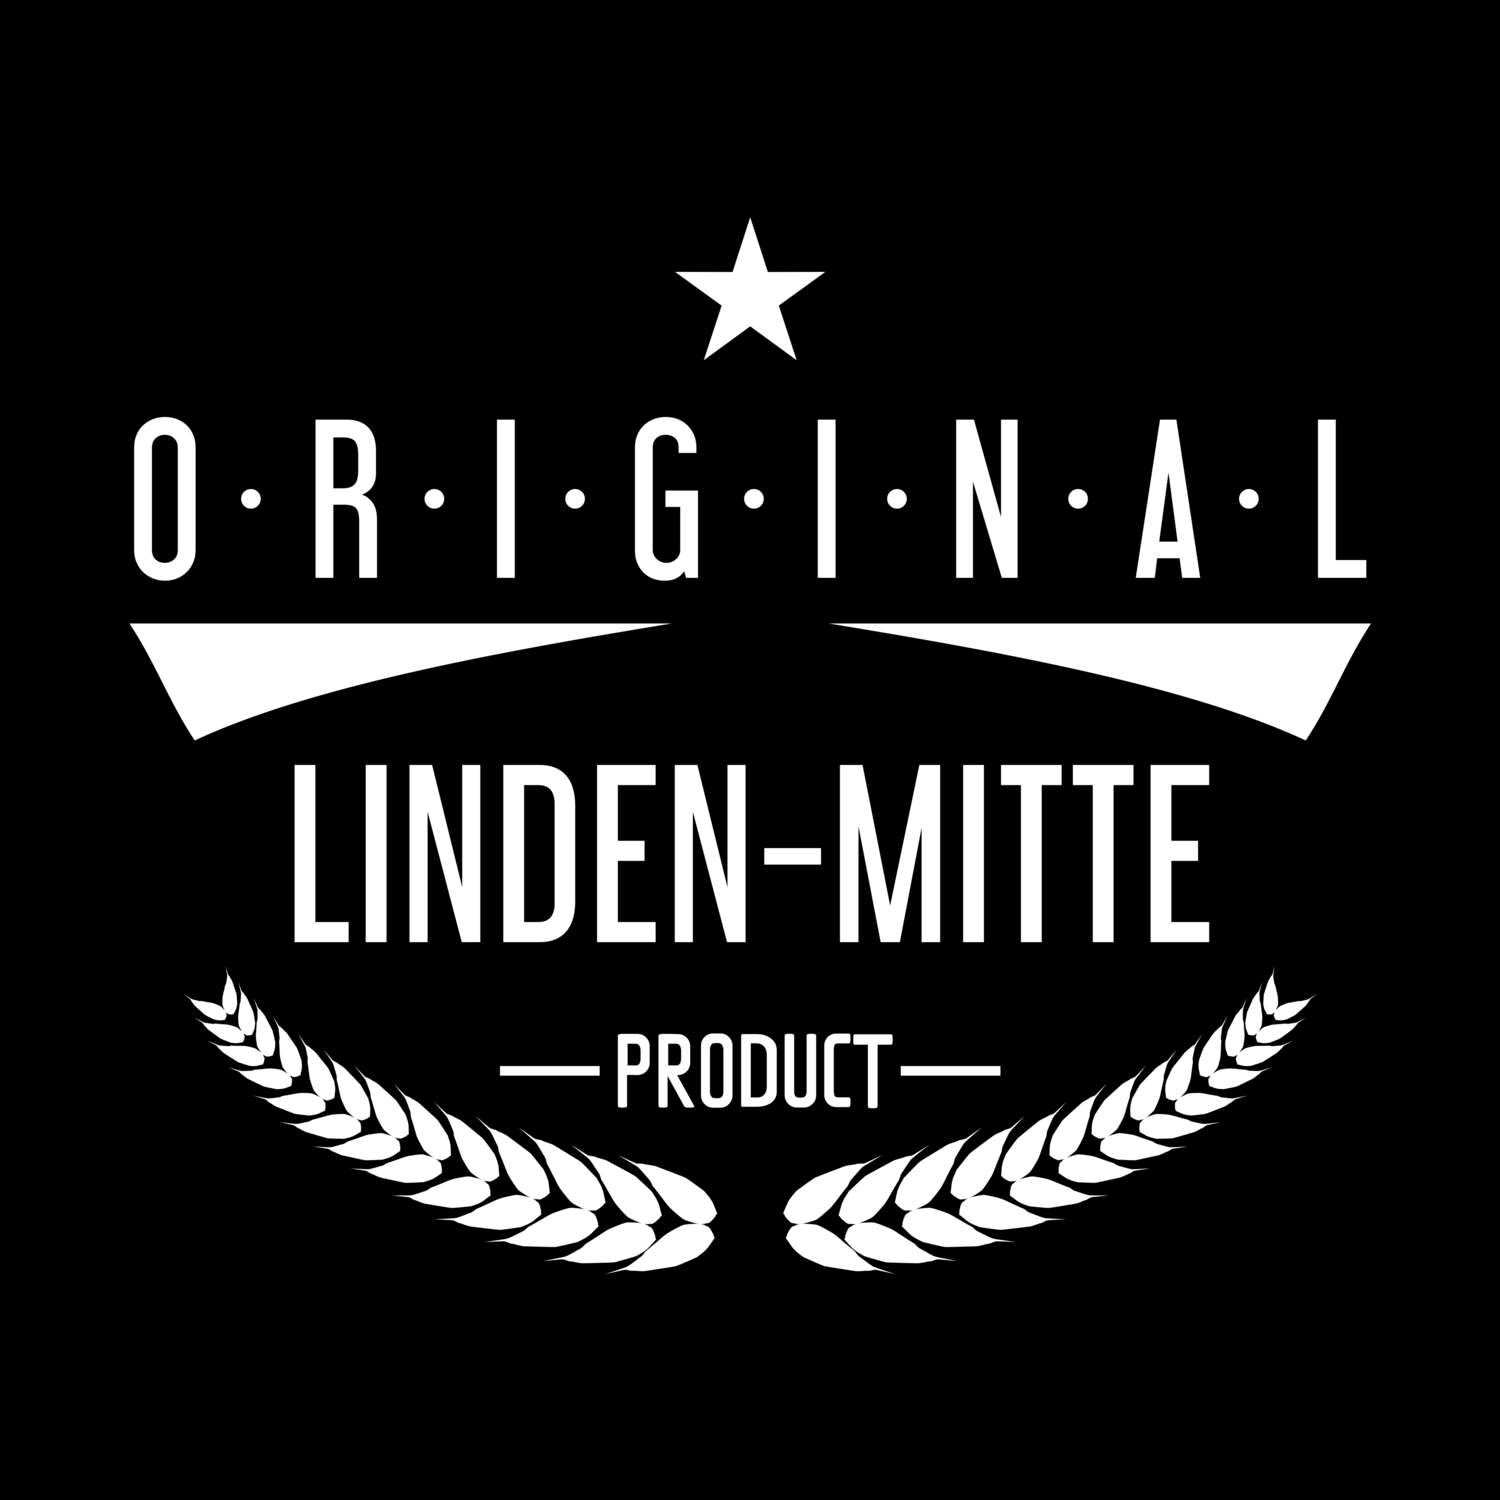 Linden-Mitte T-Shirt »Original Product«